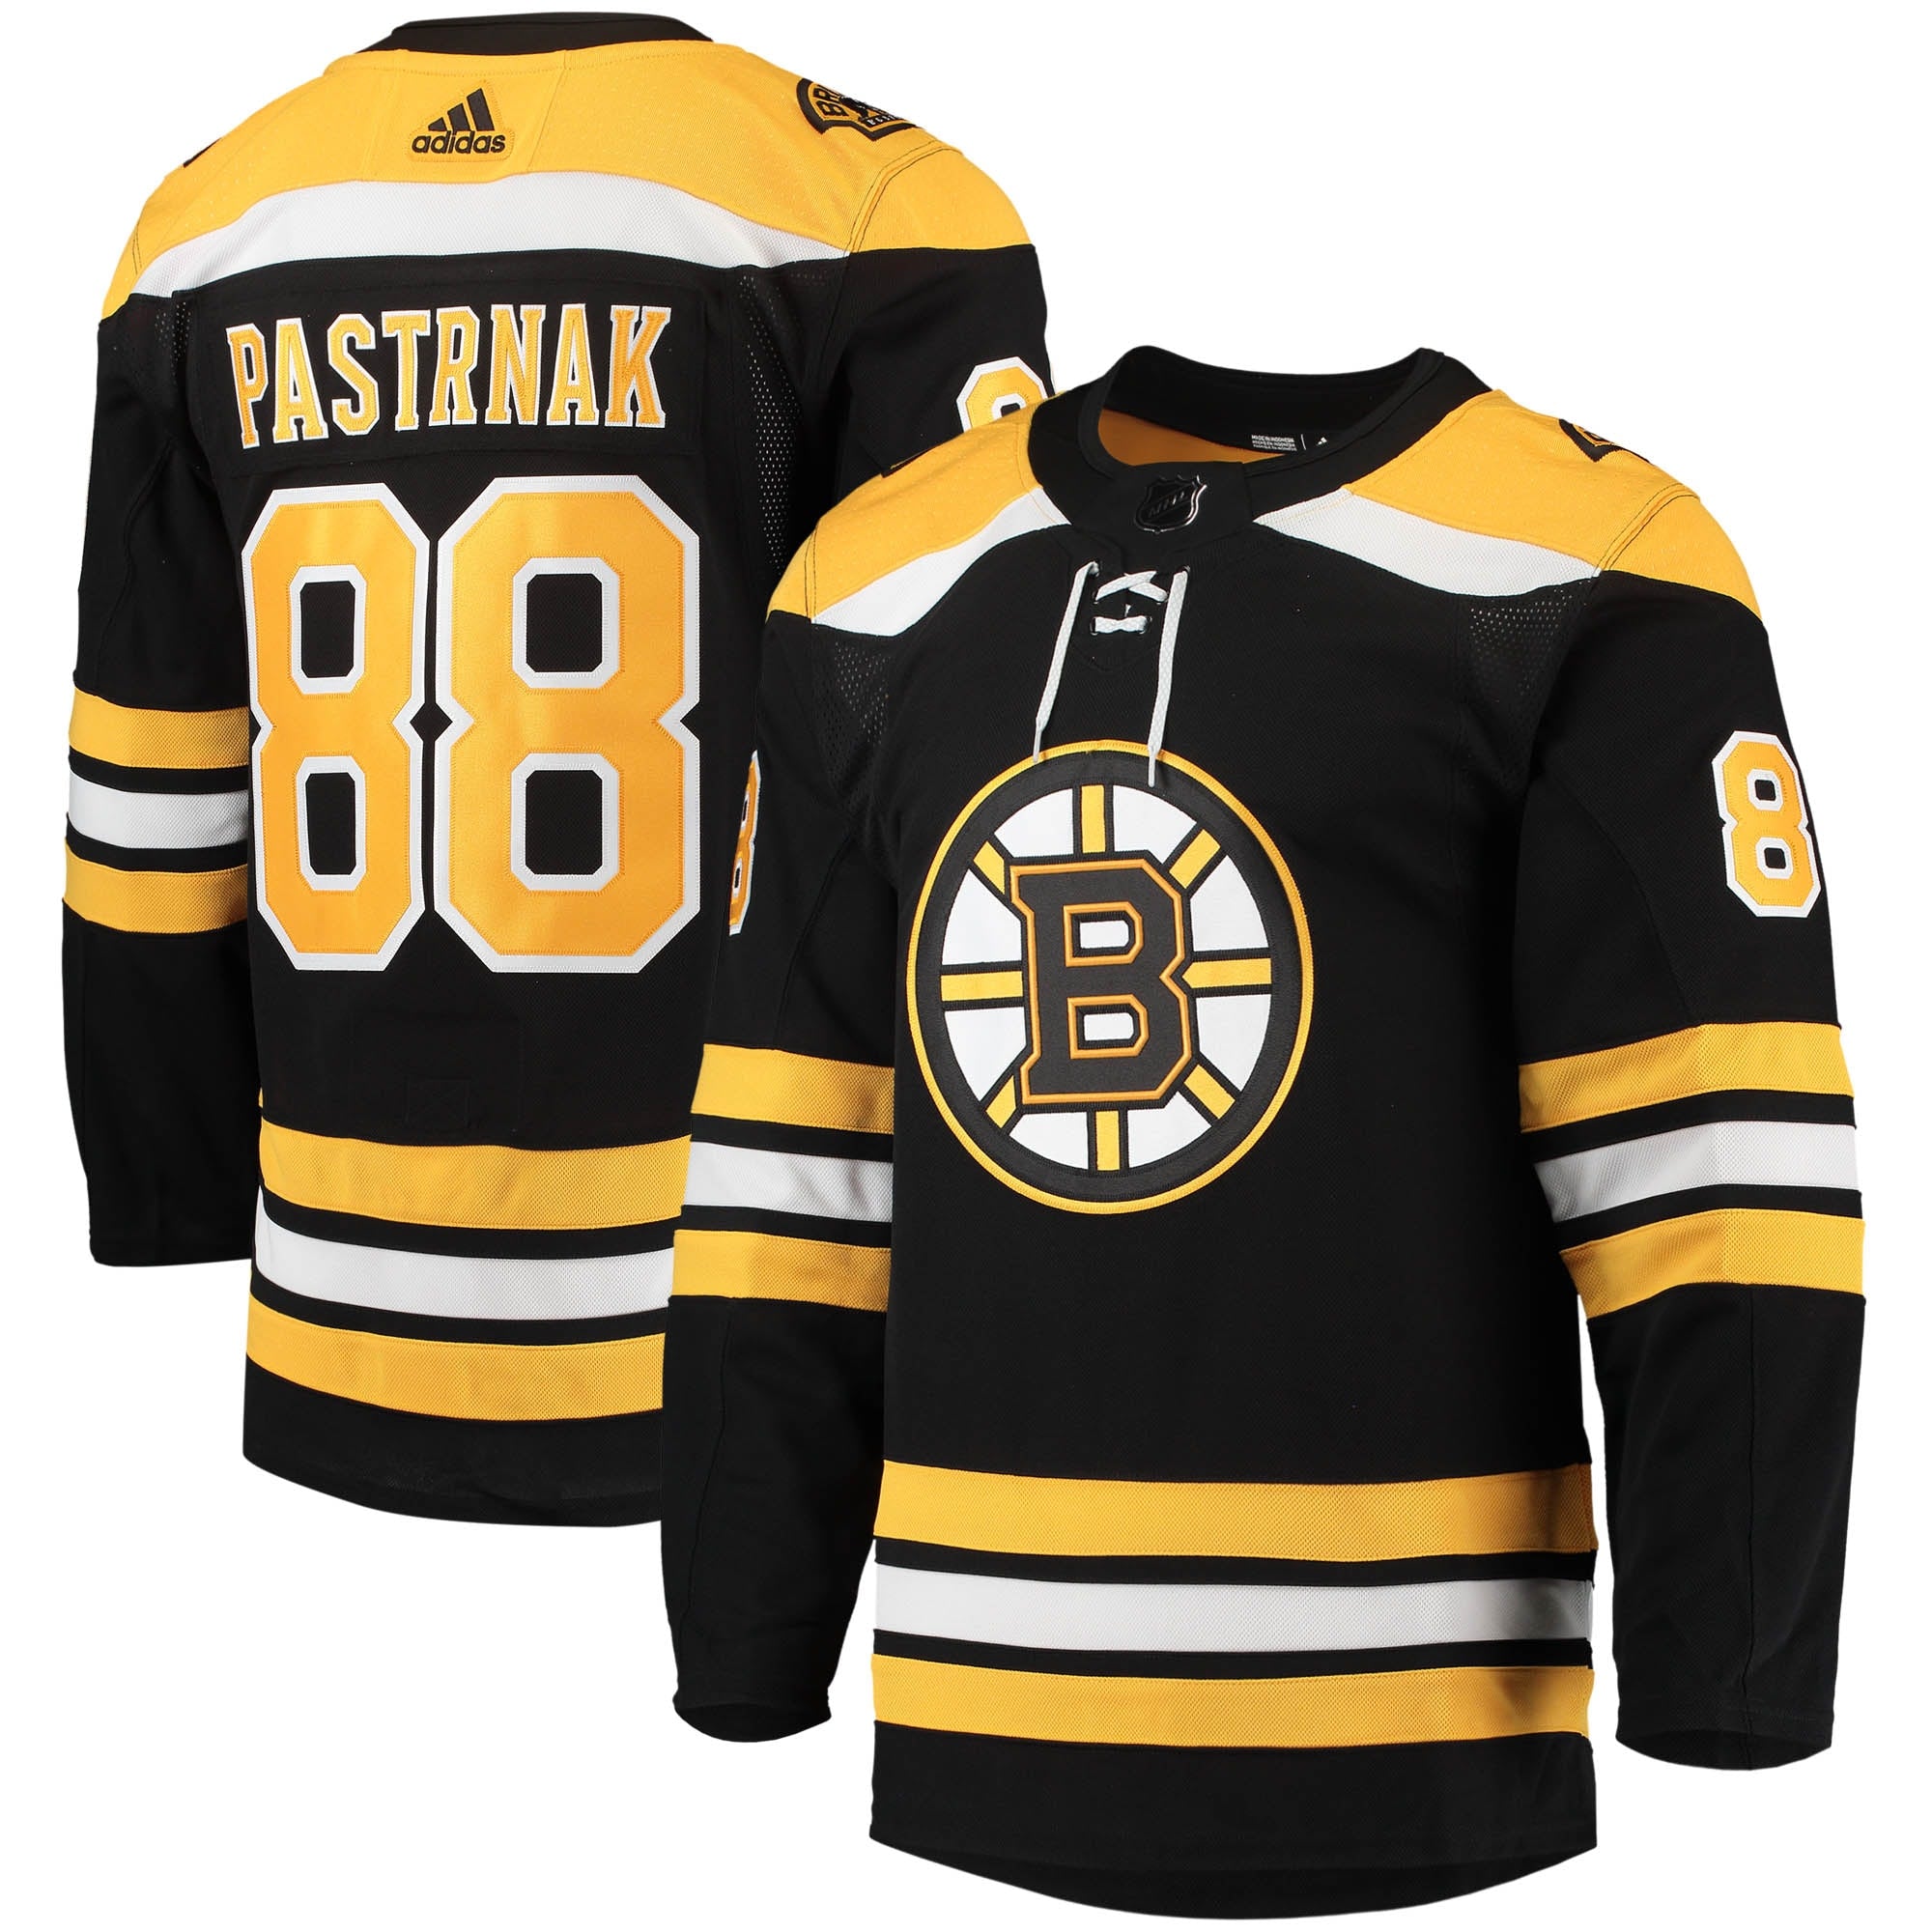 Boston Bruins XL jersey